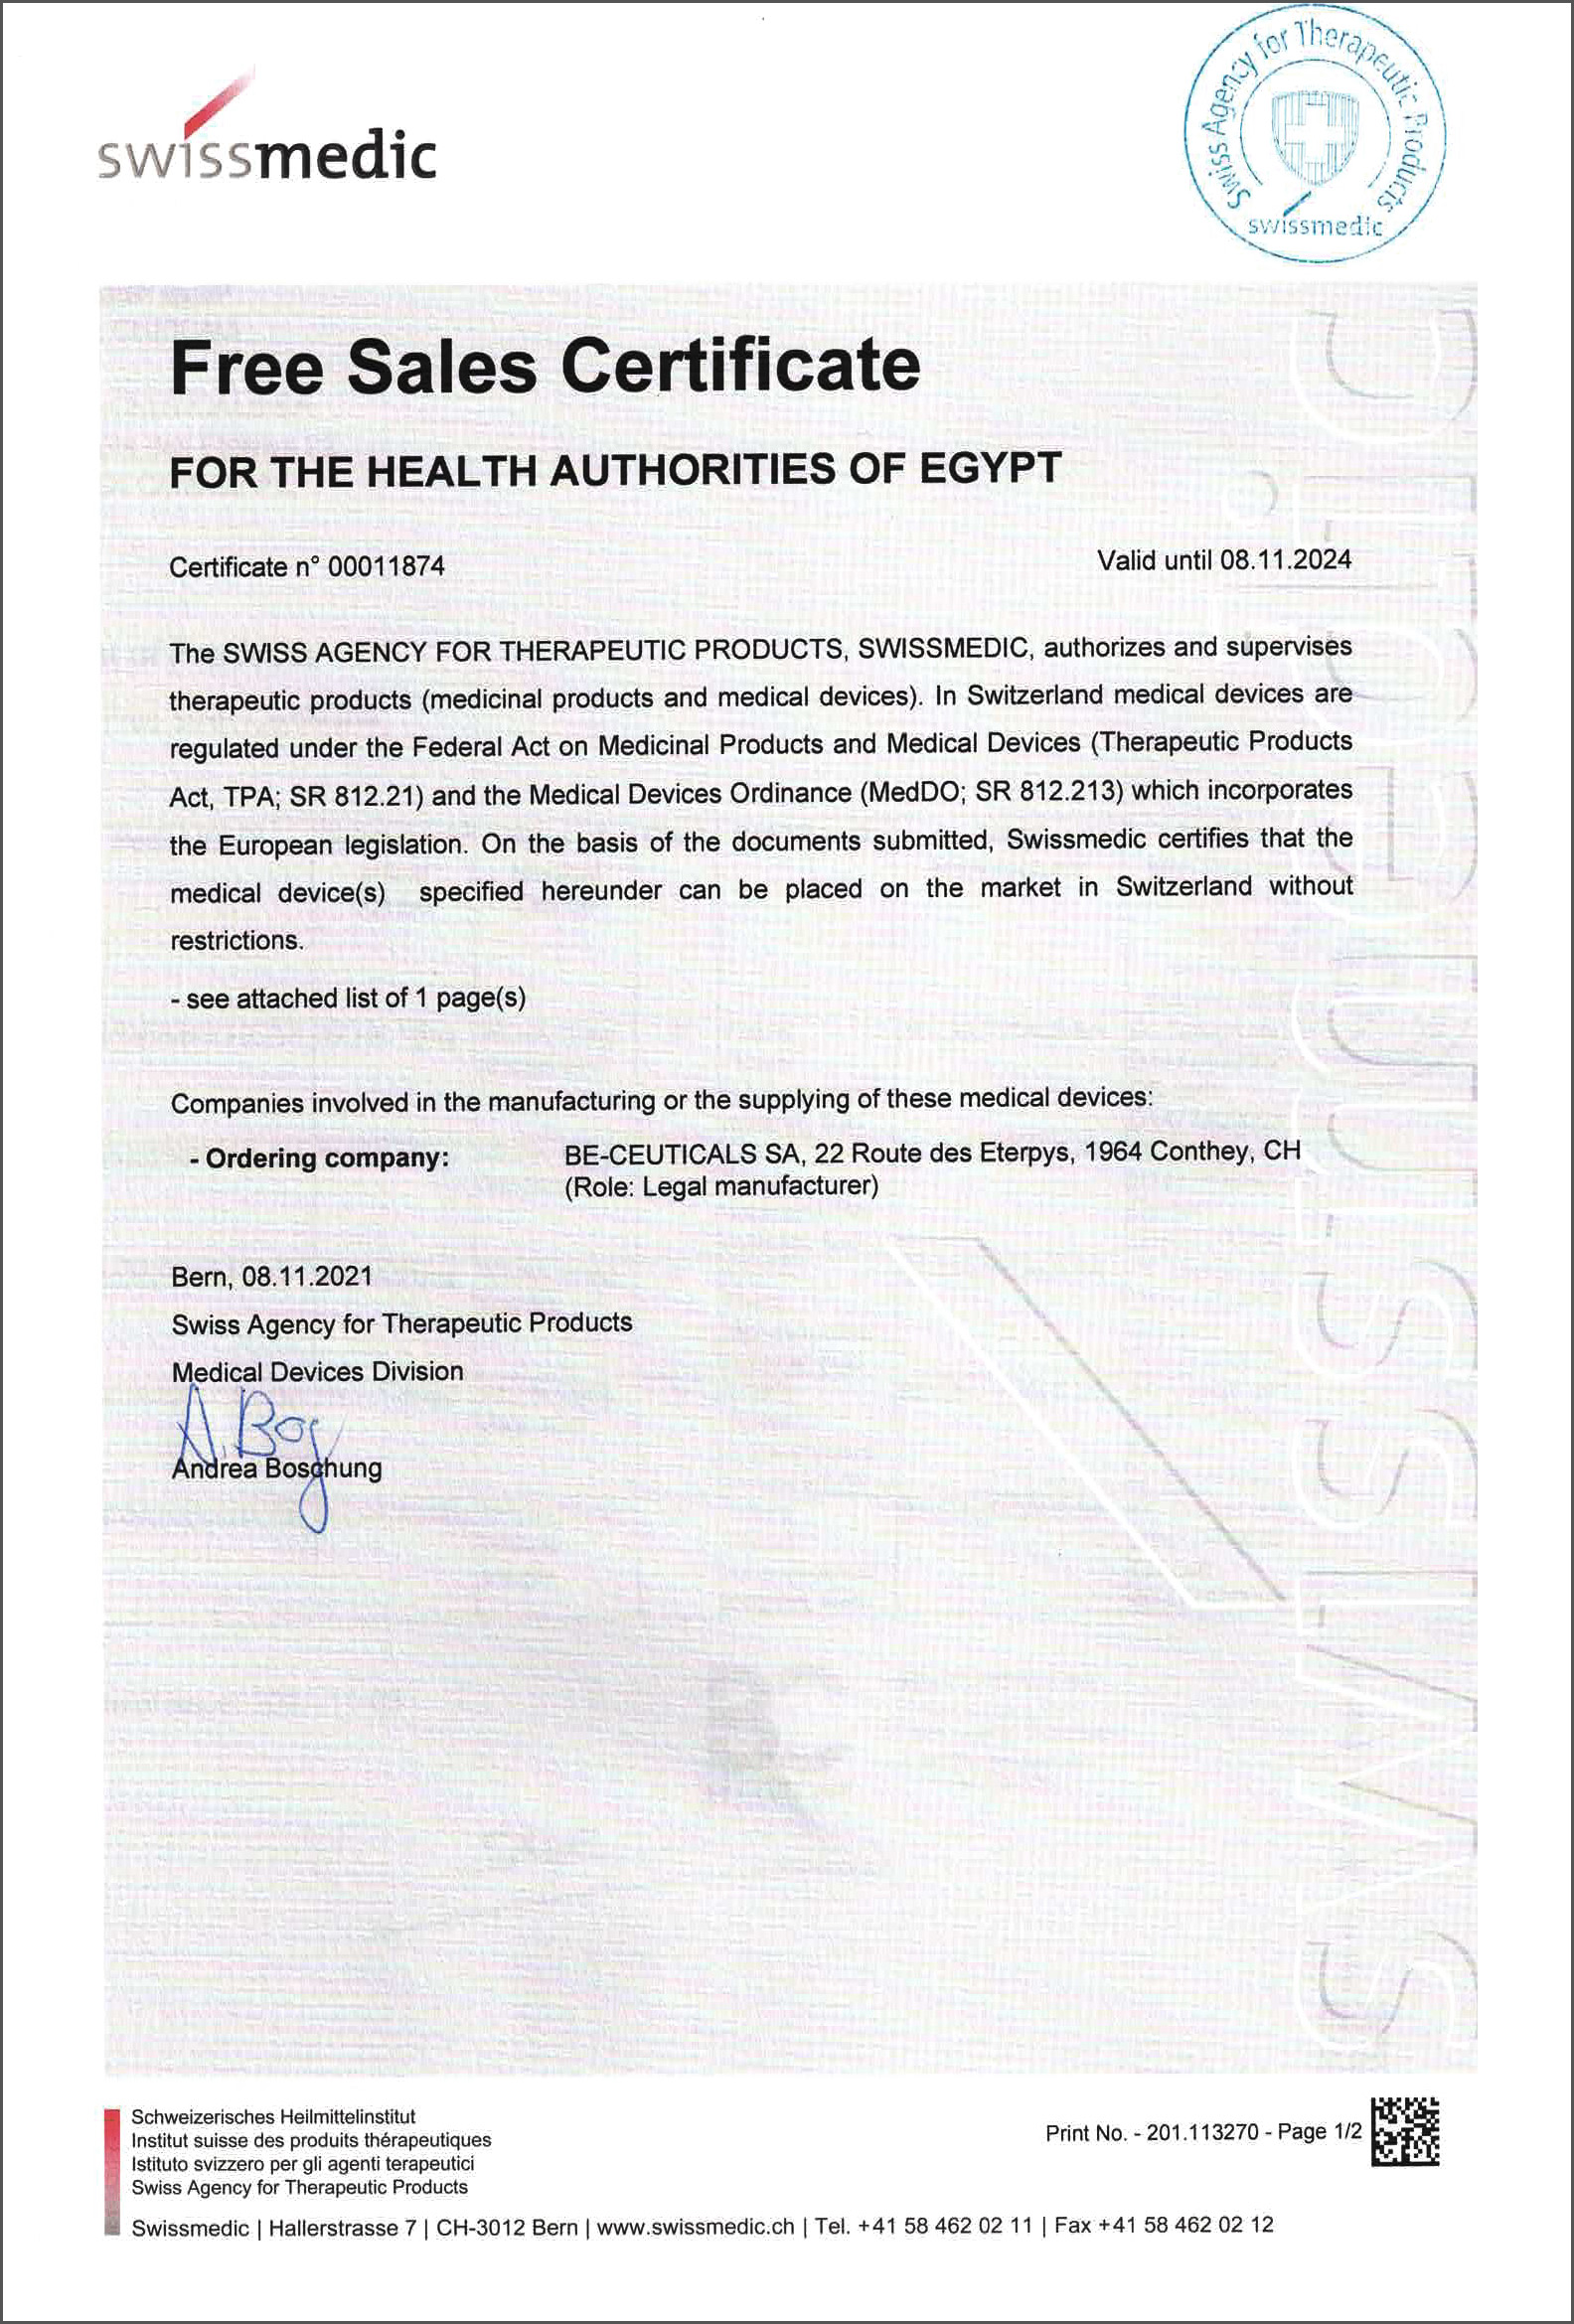 Swissmedic - Free Sales Certificate - Egypt